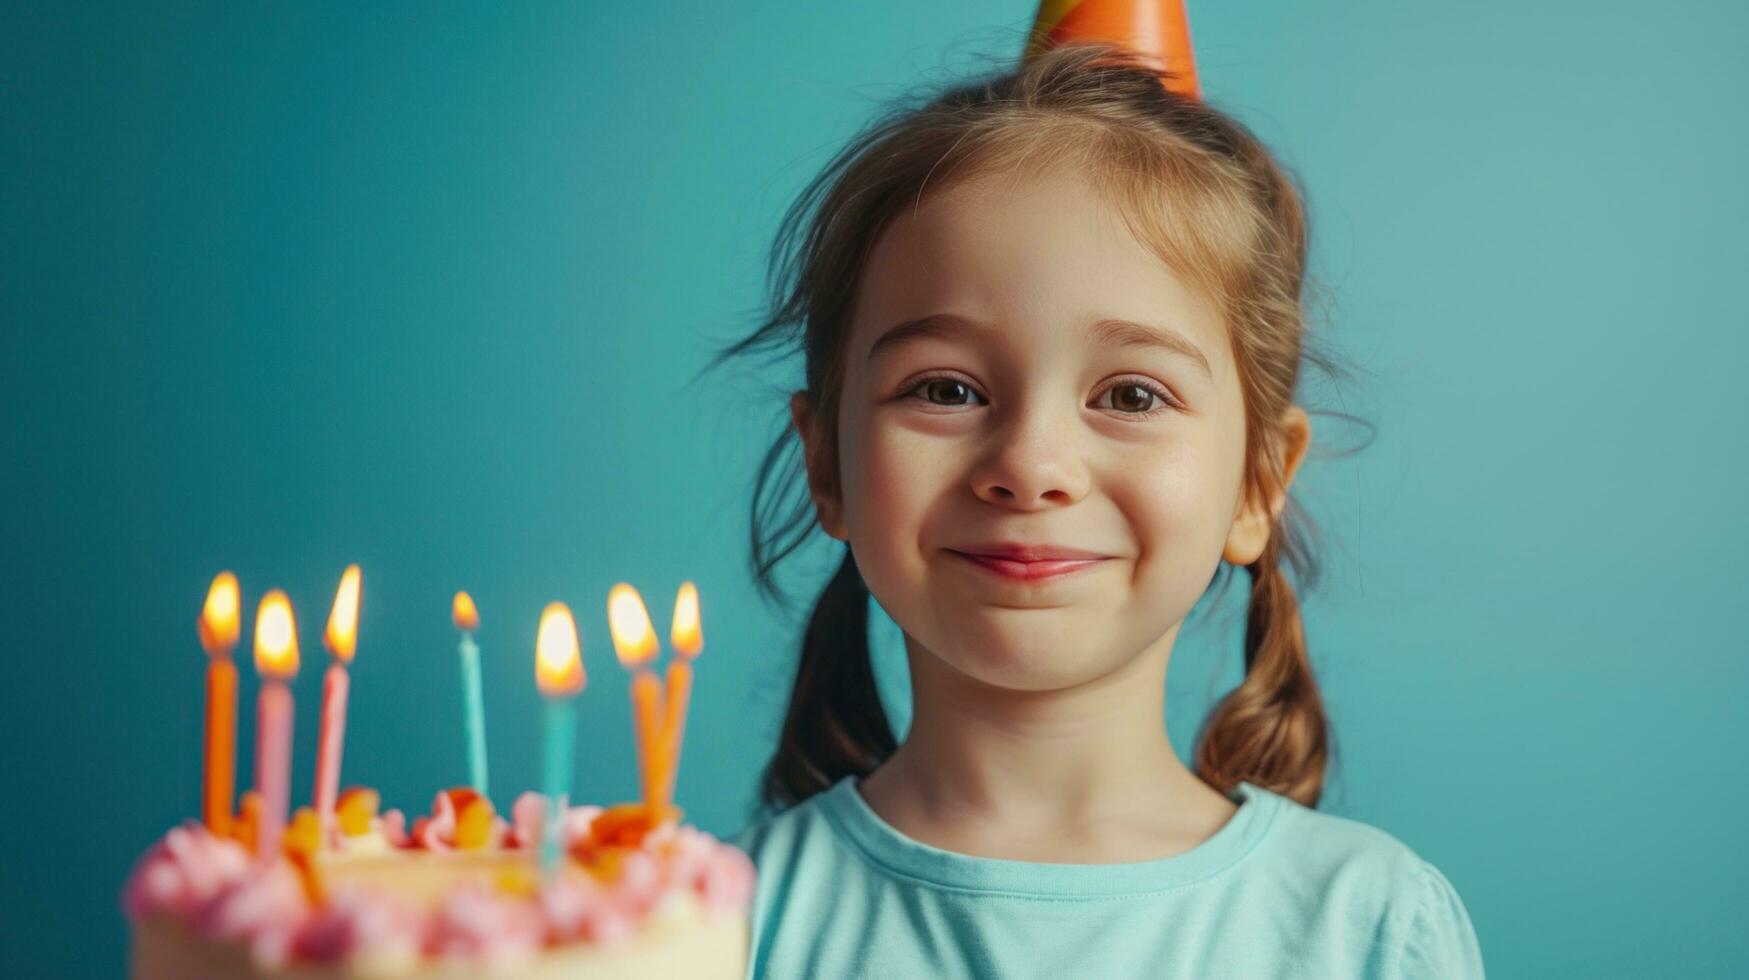 AI generated happy birthday litthe girl with birthday cake against vivid minimalist background photo